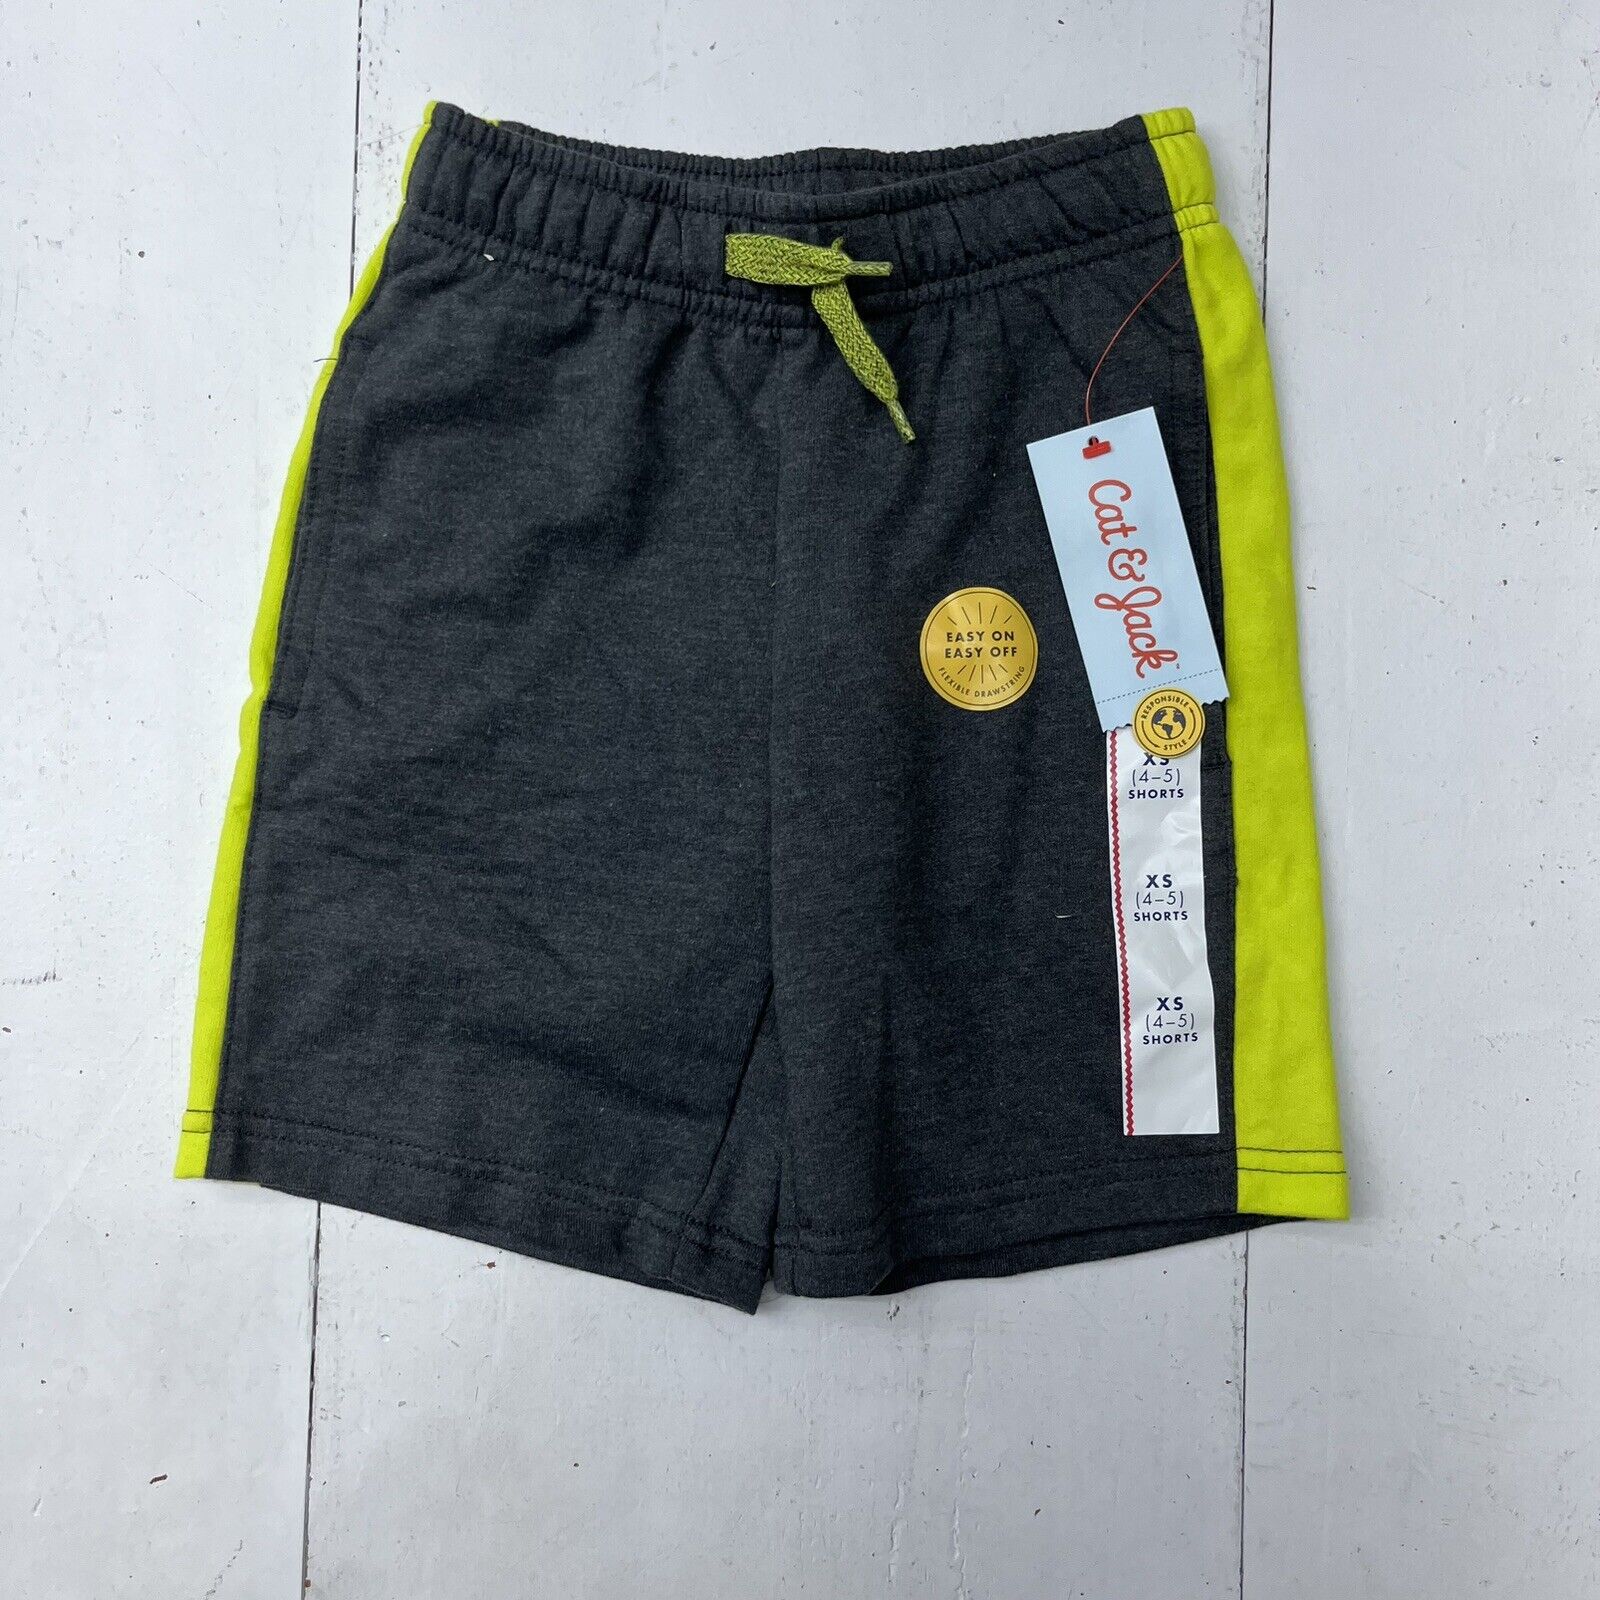 Cat & Jack Charcoal/Yellow Athletic Shorts Boys Size XS (4/5) NEW